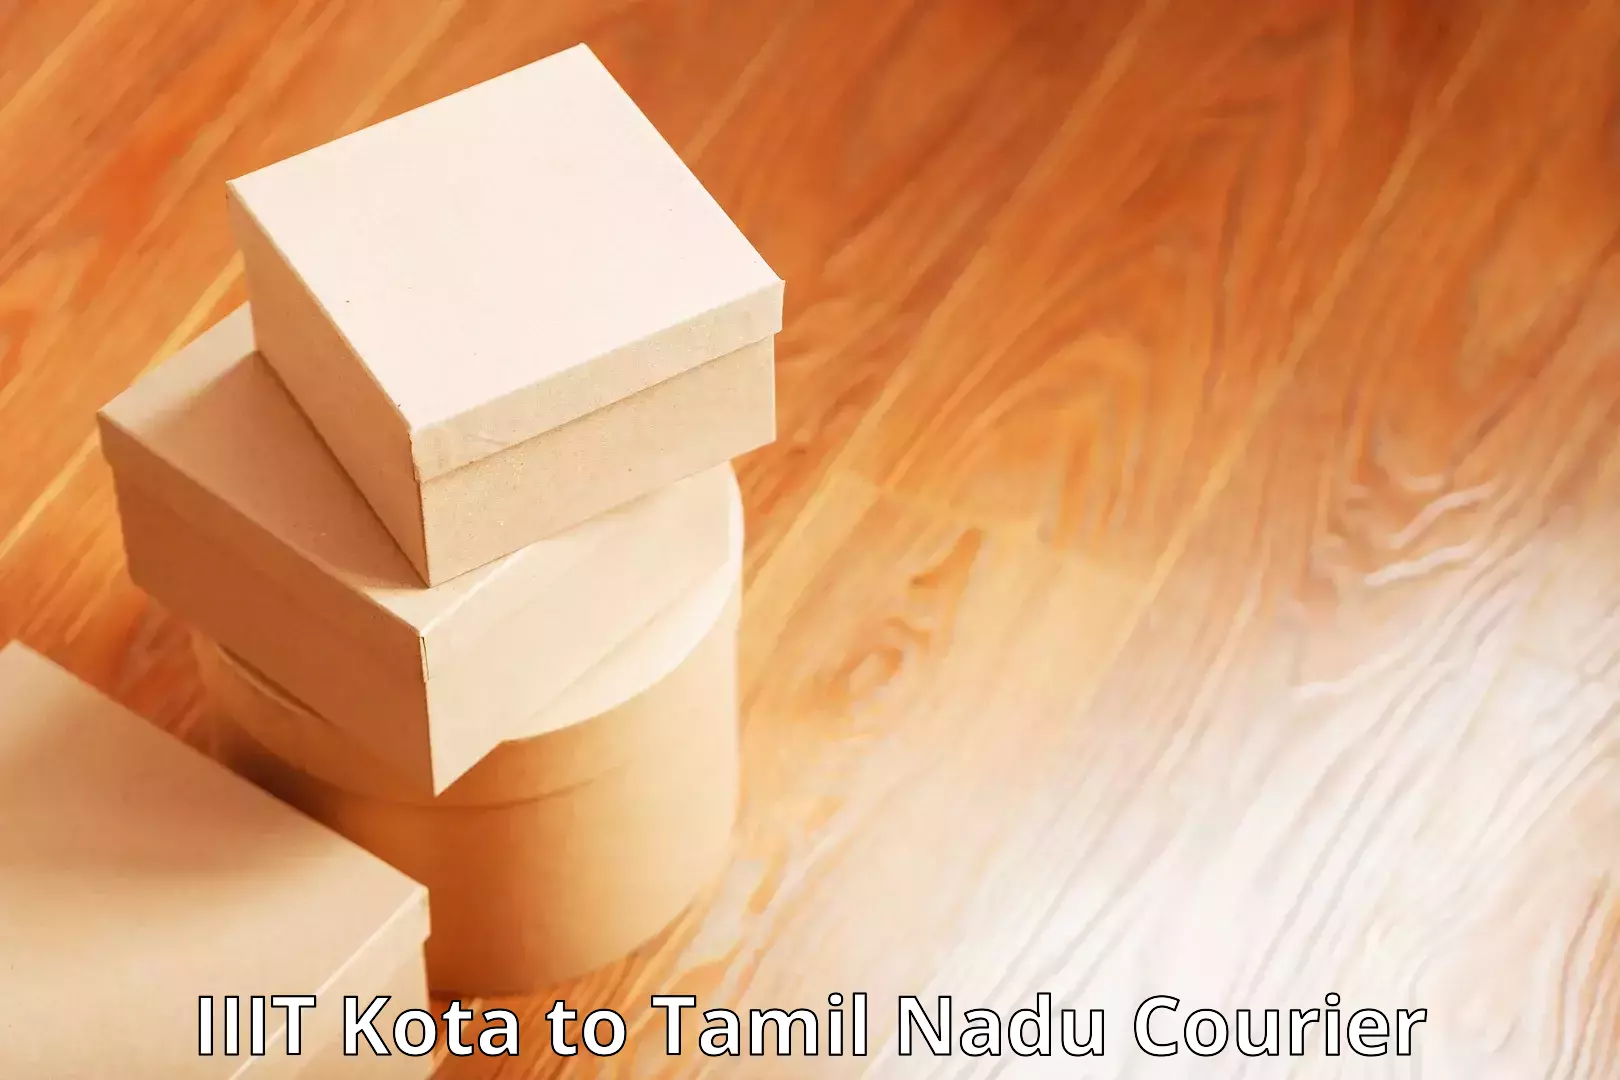 On-demand shipping options IIIT Kota to Amrita Vishwa Vidyapeetham Coimbatore